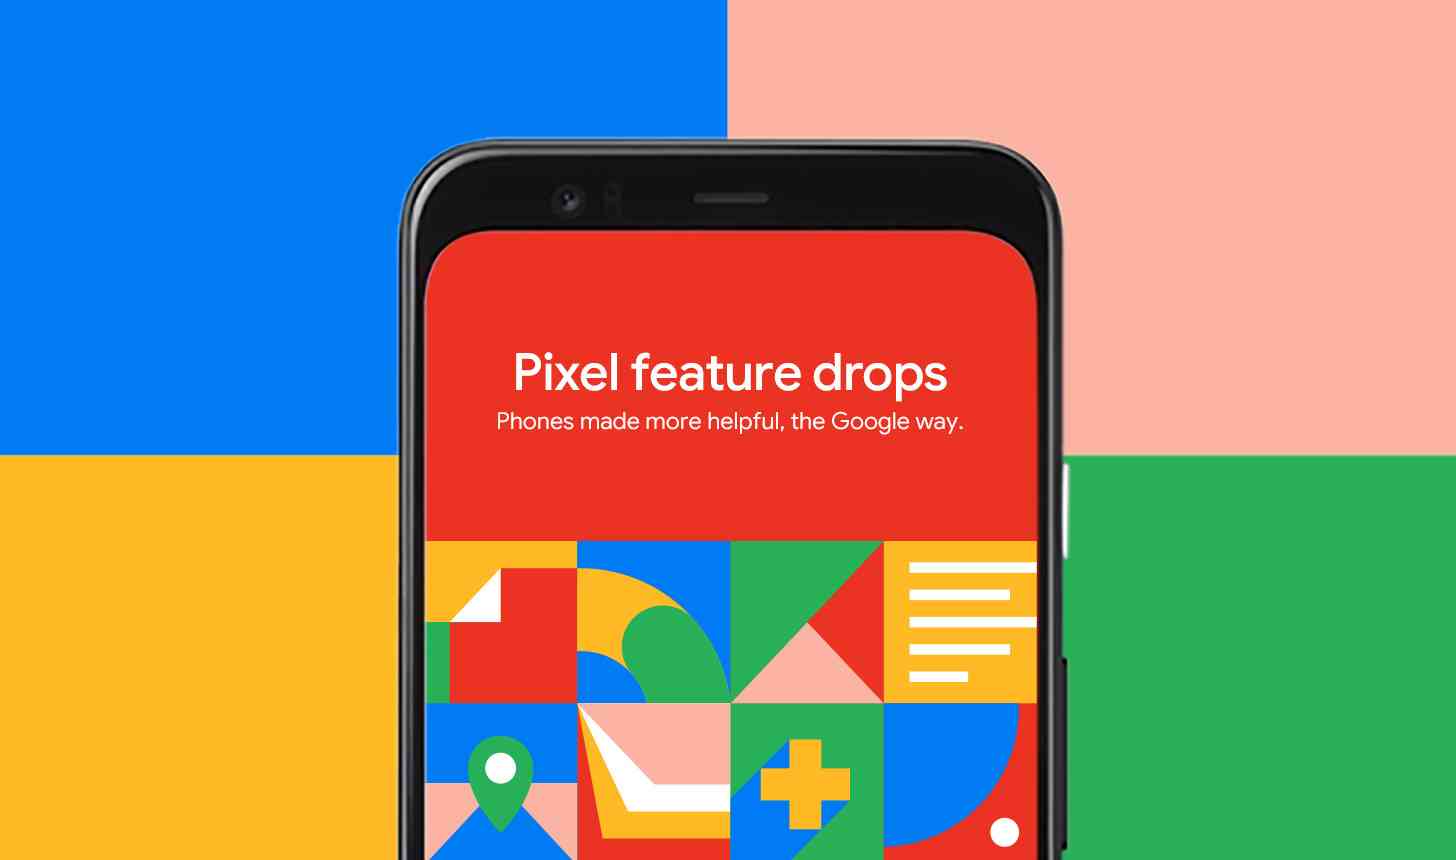 Google Pixel feature drops update